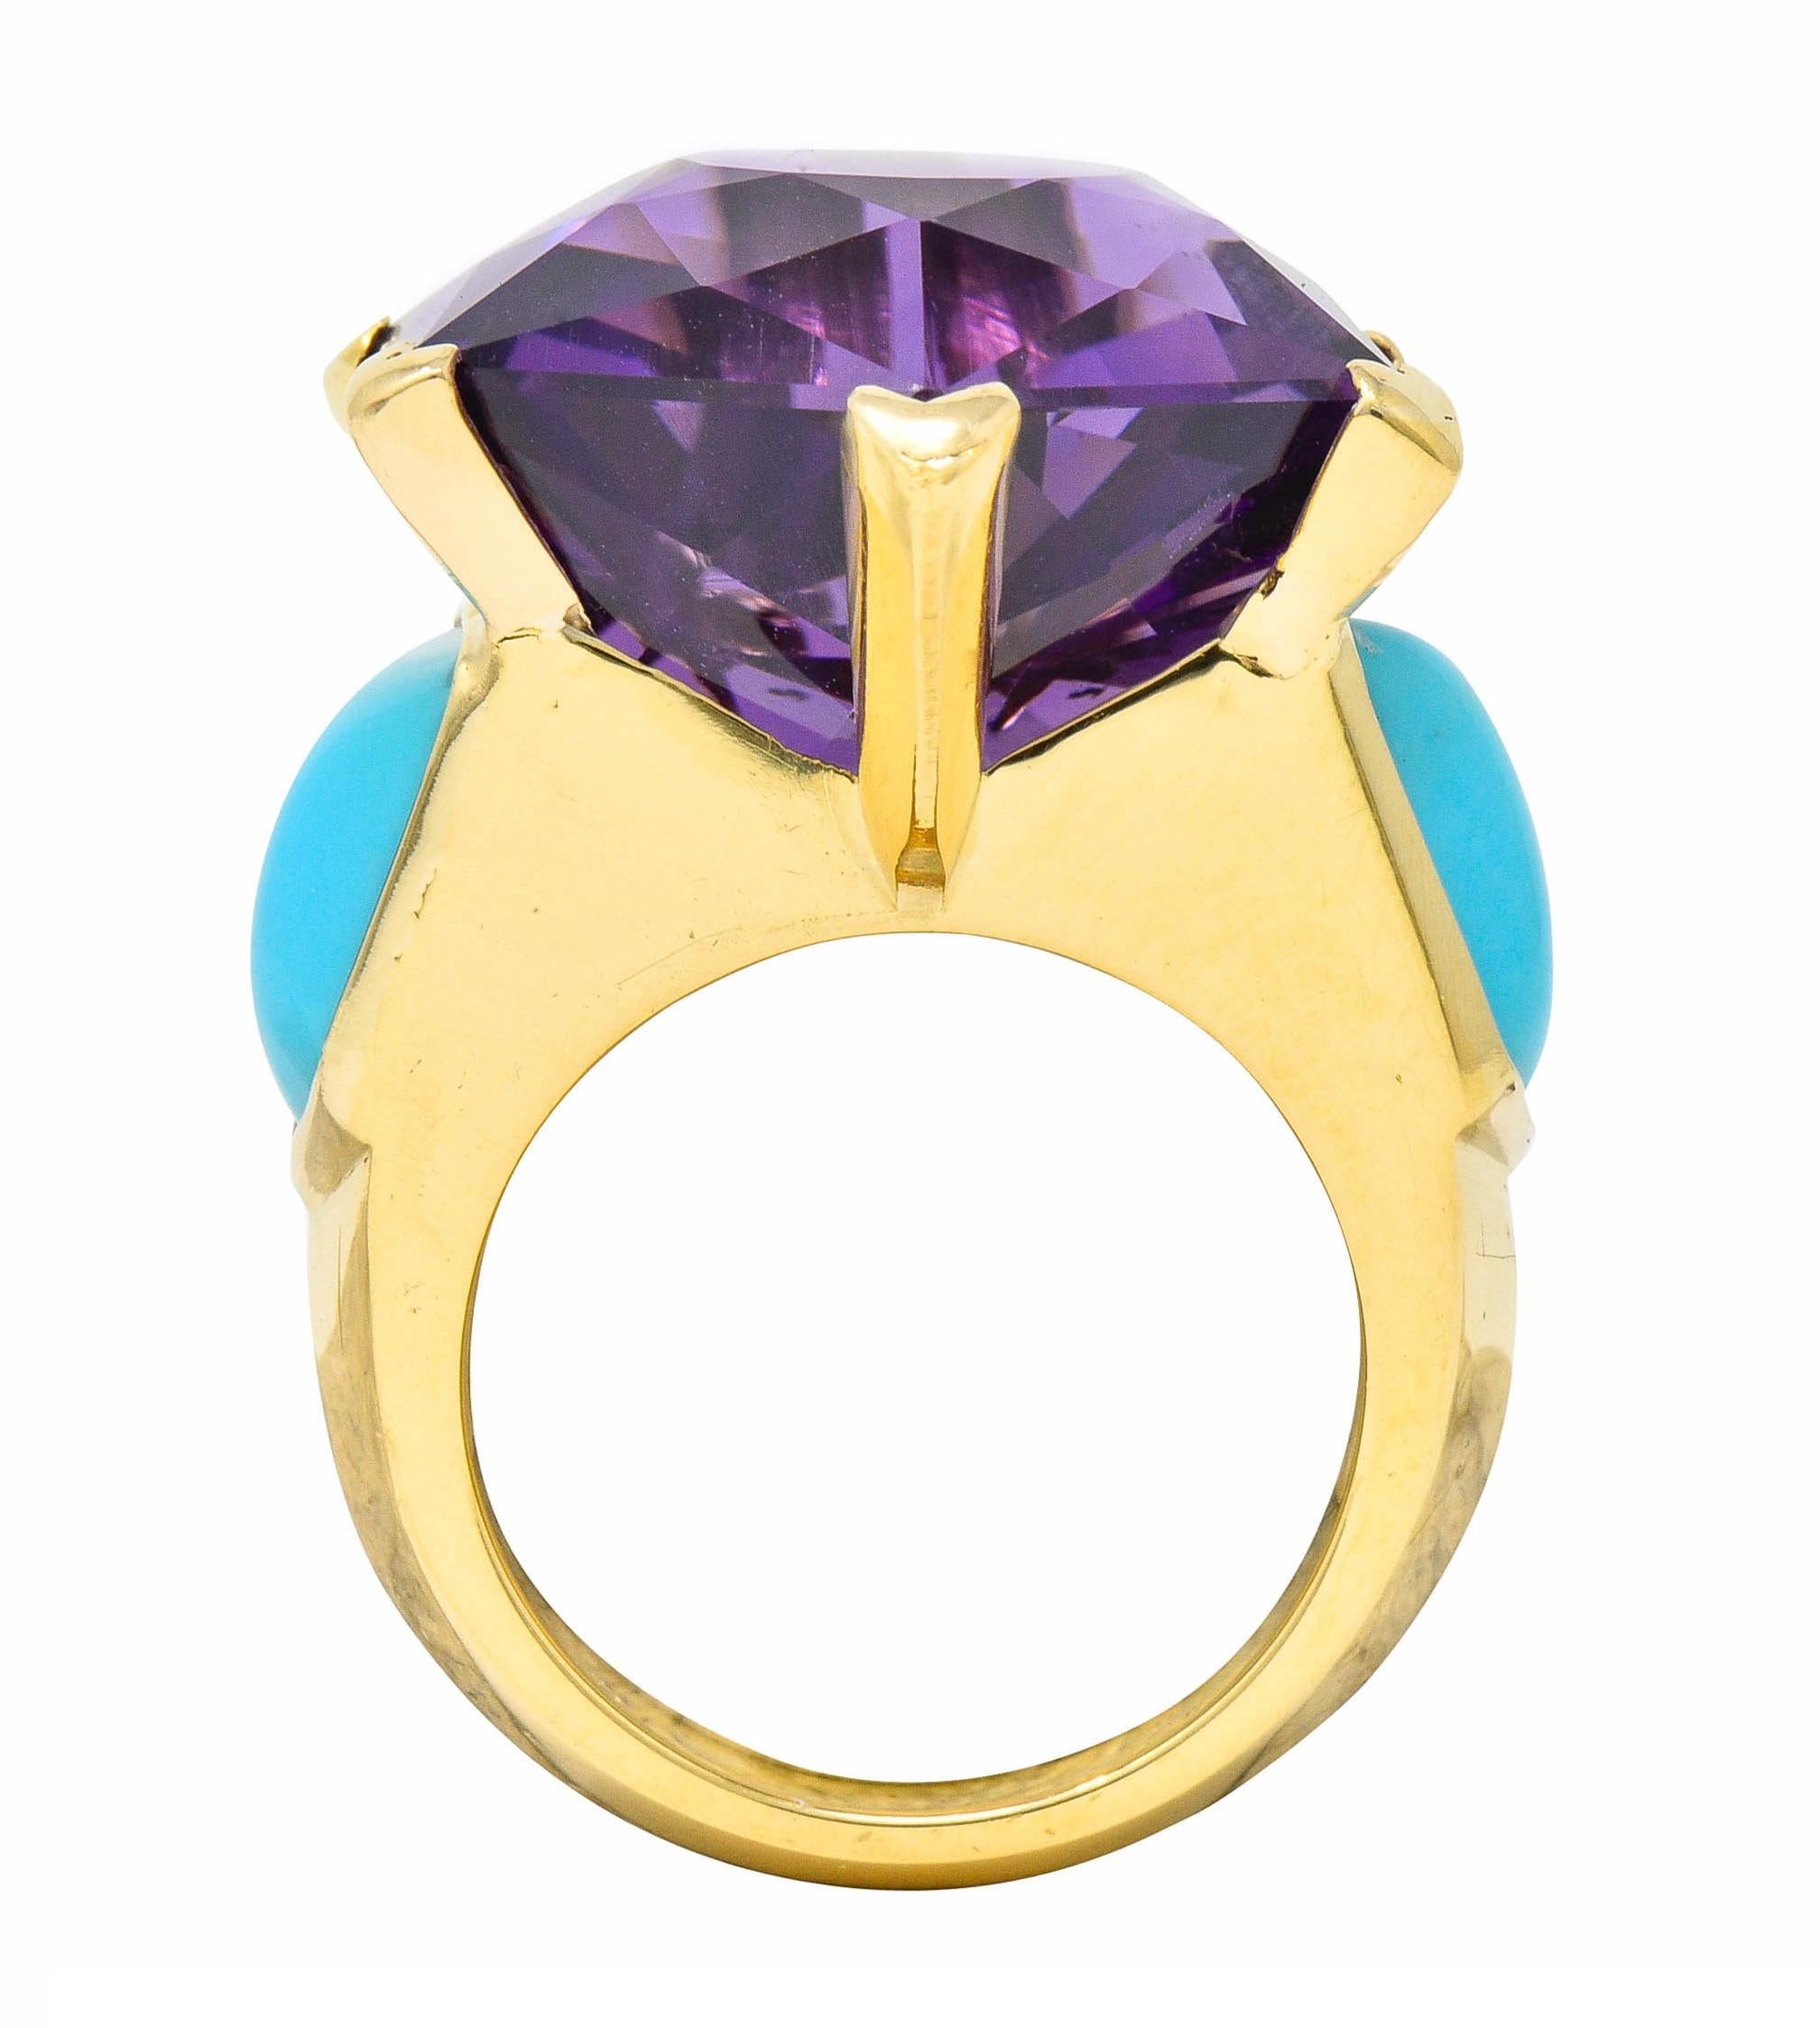 French Vintage Hexagonal Amethyst Turquoise 18 Karat Gold Statement Ring 1